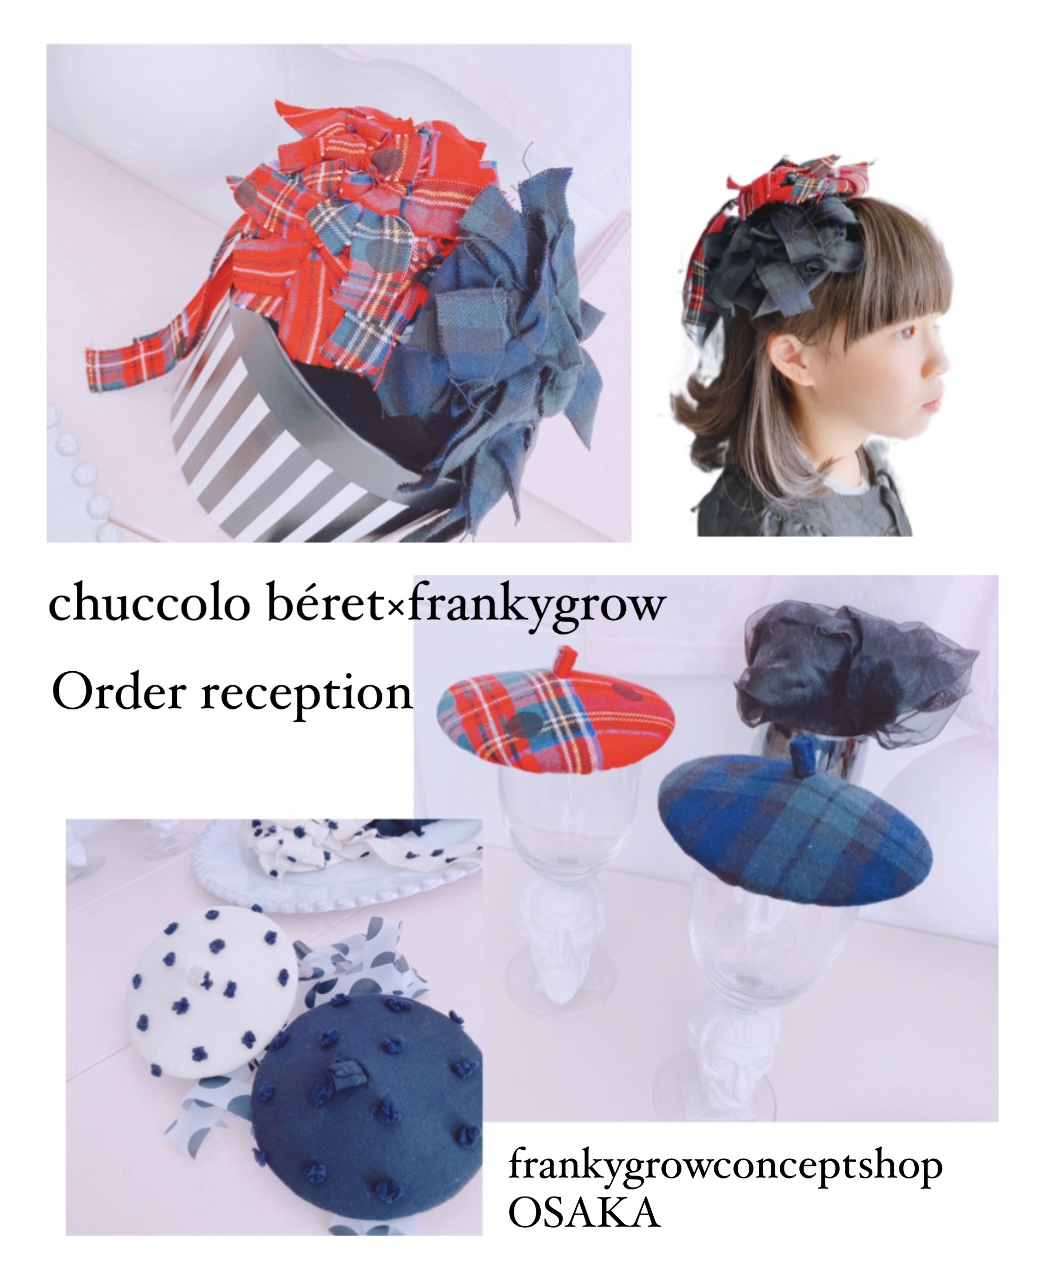 chuccolo béret × frankygrow 受注会 at OSAKA